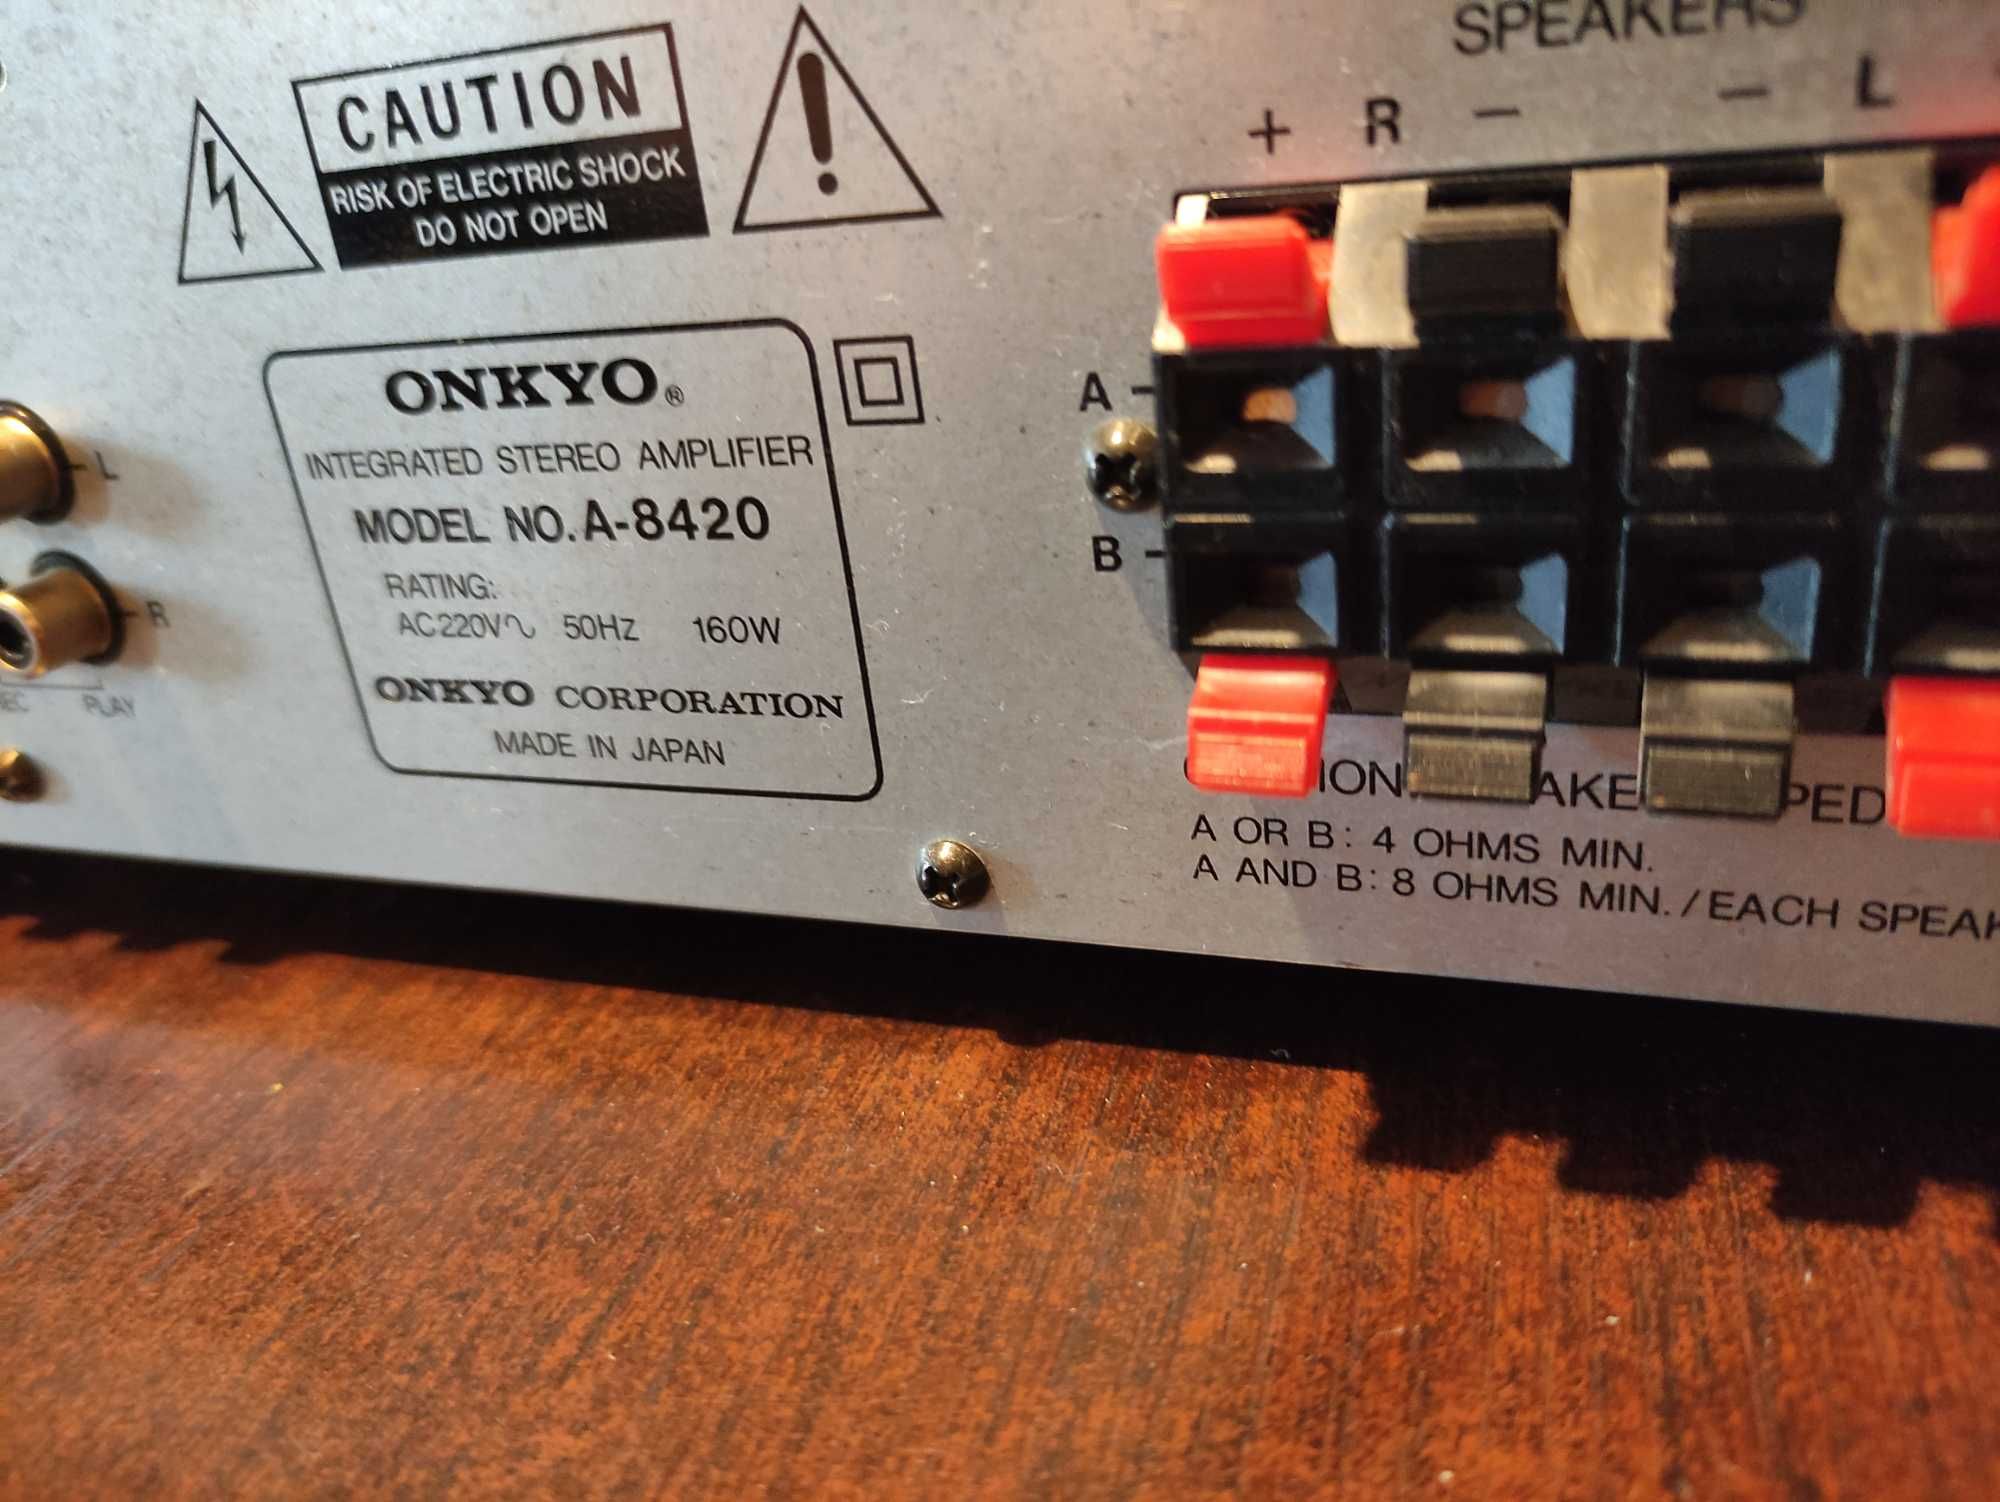 Onkyo A -8420 amplifier